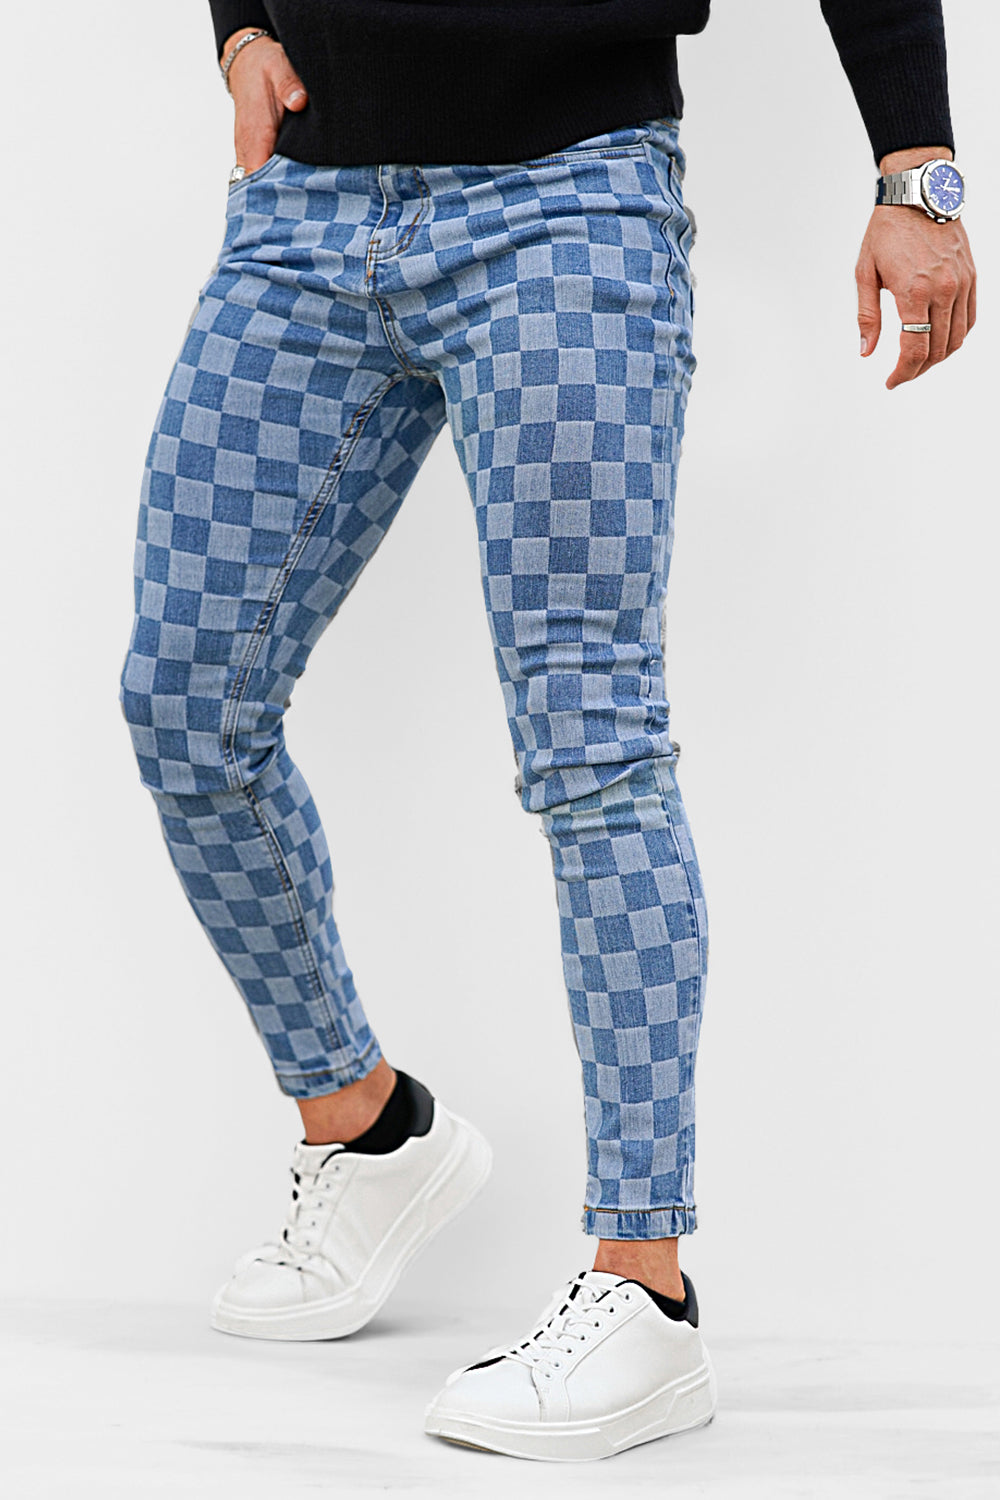 gingtto fashion skinny jeans for men - blue & checkerboard